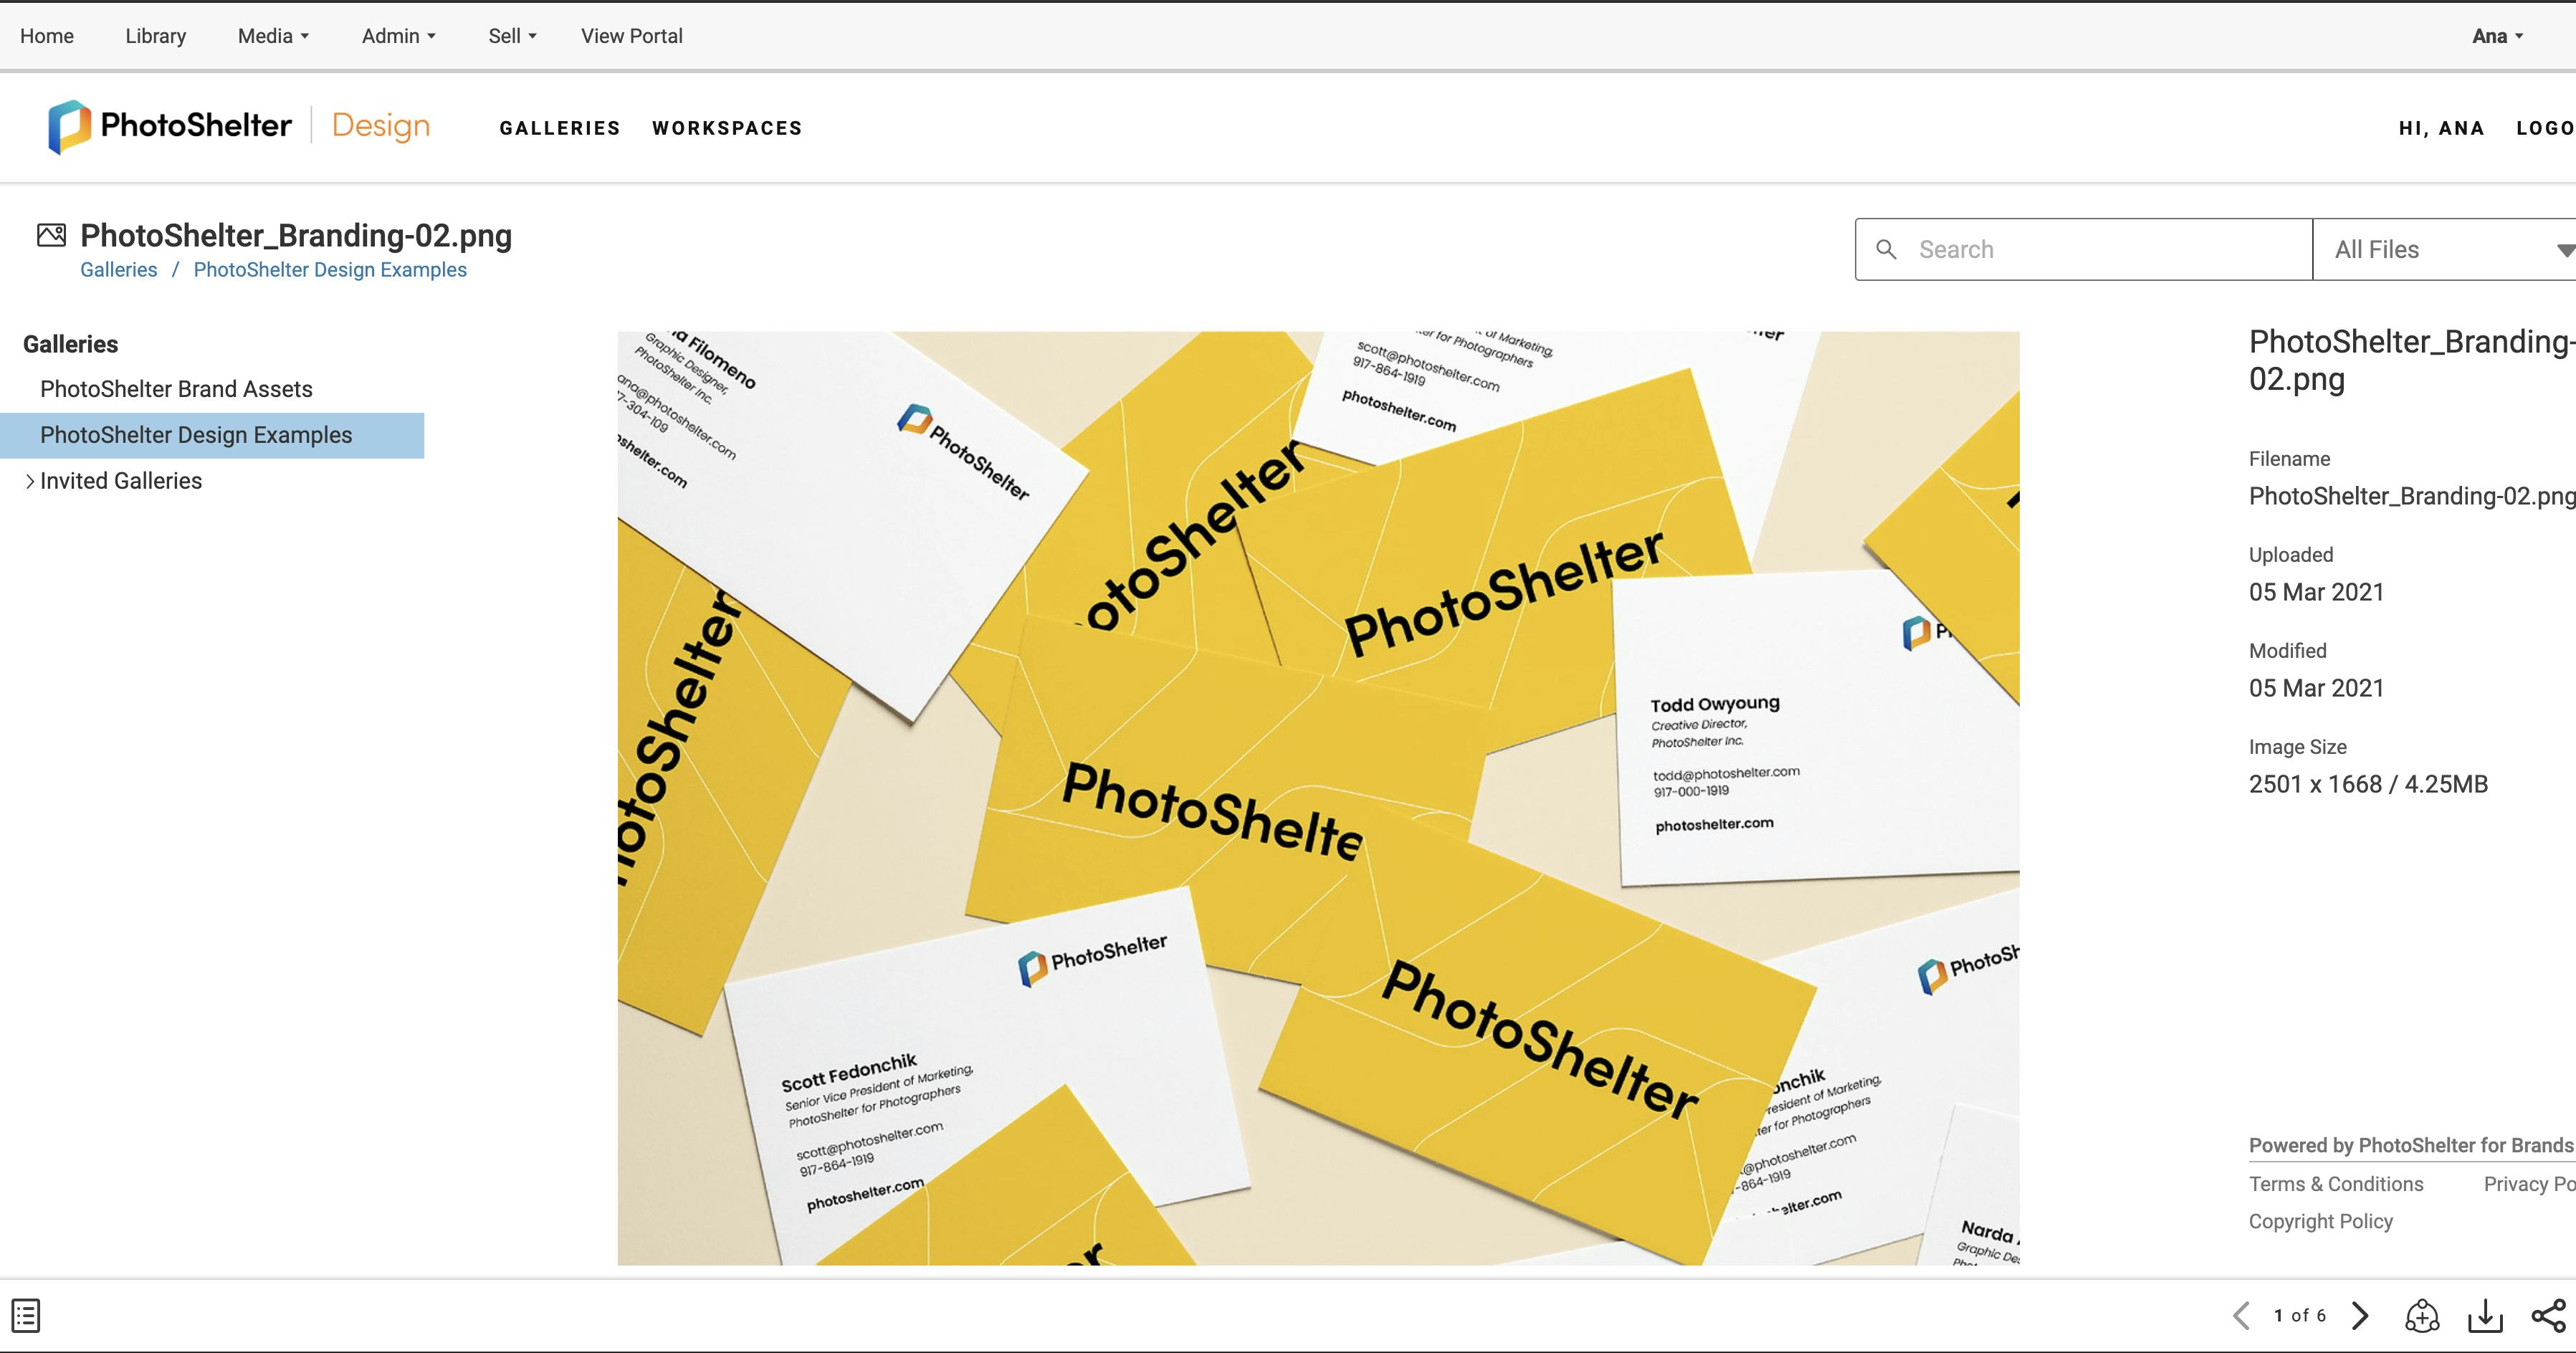 PhotoShelter for Brands Software - 7